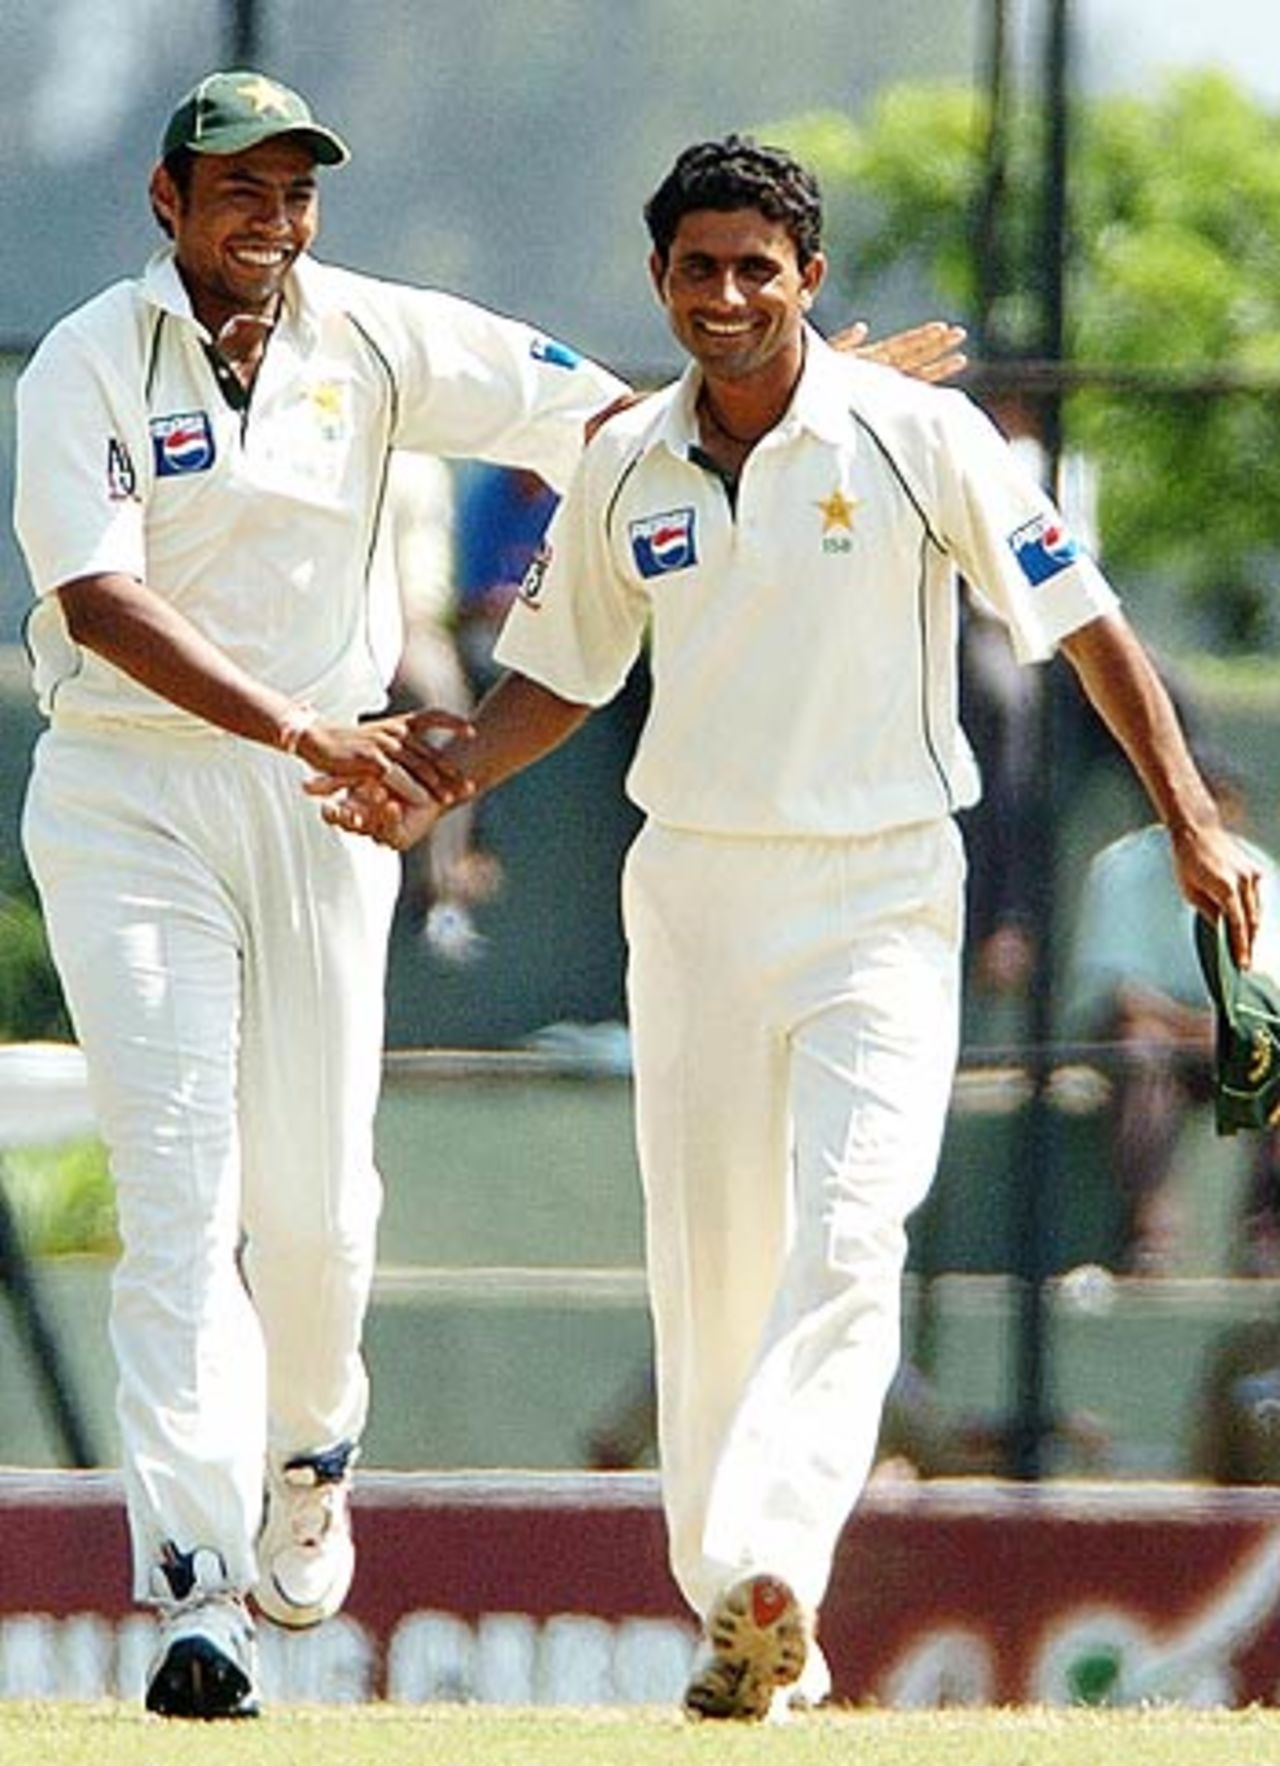 Danish Kaneria congratulates Abdul Razzaq on finishing the Sri Lankan innings, Sri Lanka v Pakistan, 2nd Test, Kandy, 3rd day, April 5, 2006